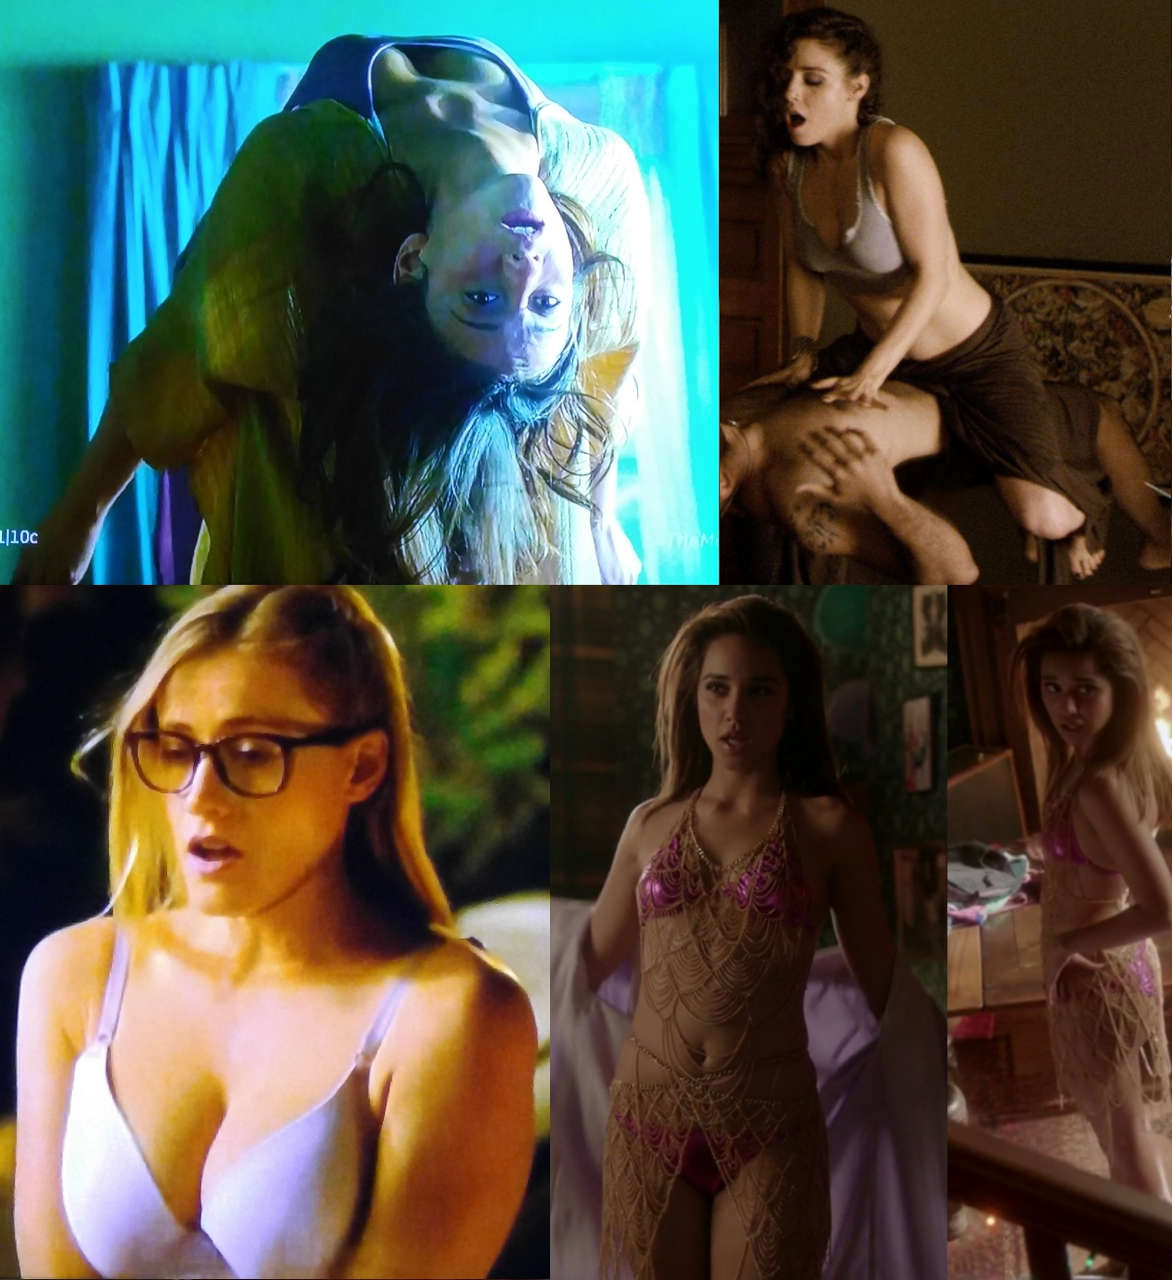 Olivia dudley leaked nudes